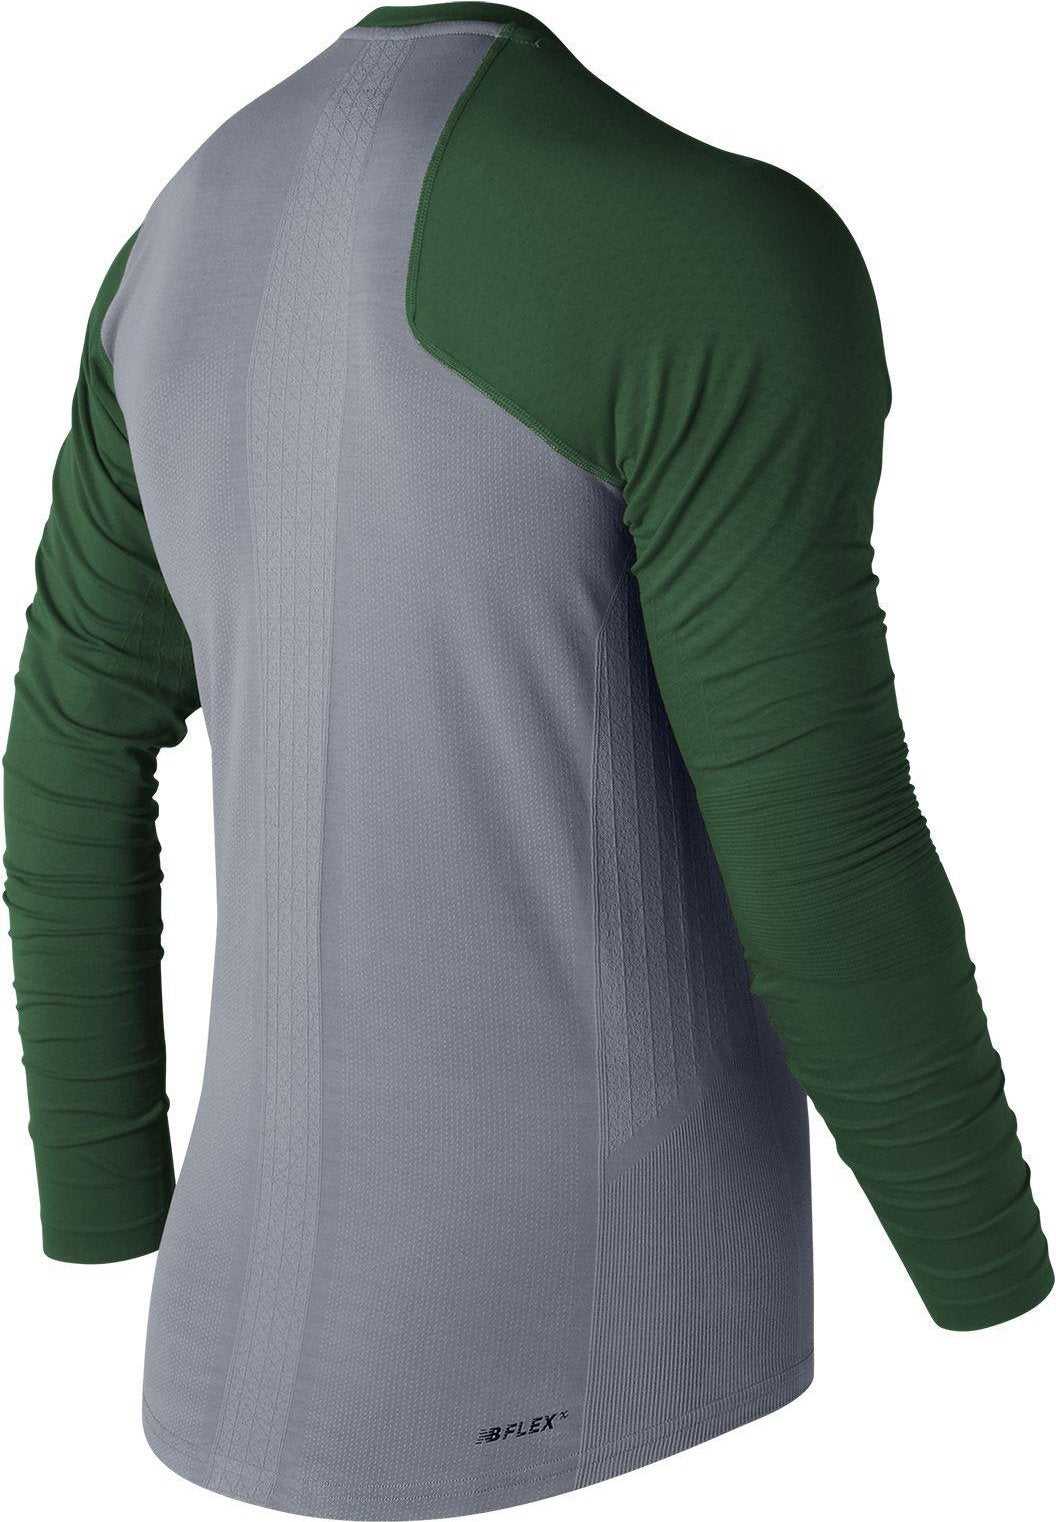 New Balance Seamless X4J Asymmetrical Shirt Right - Dark Green - HIT a Double